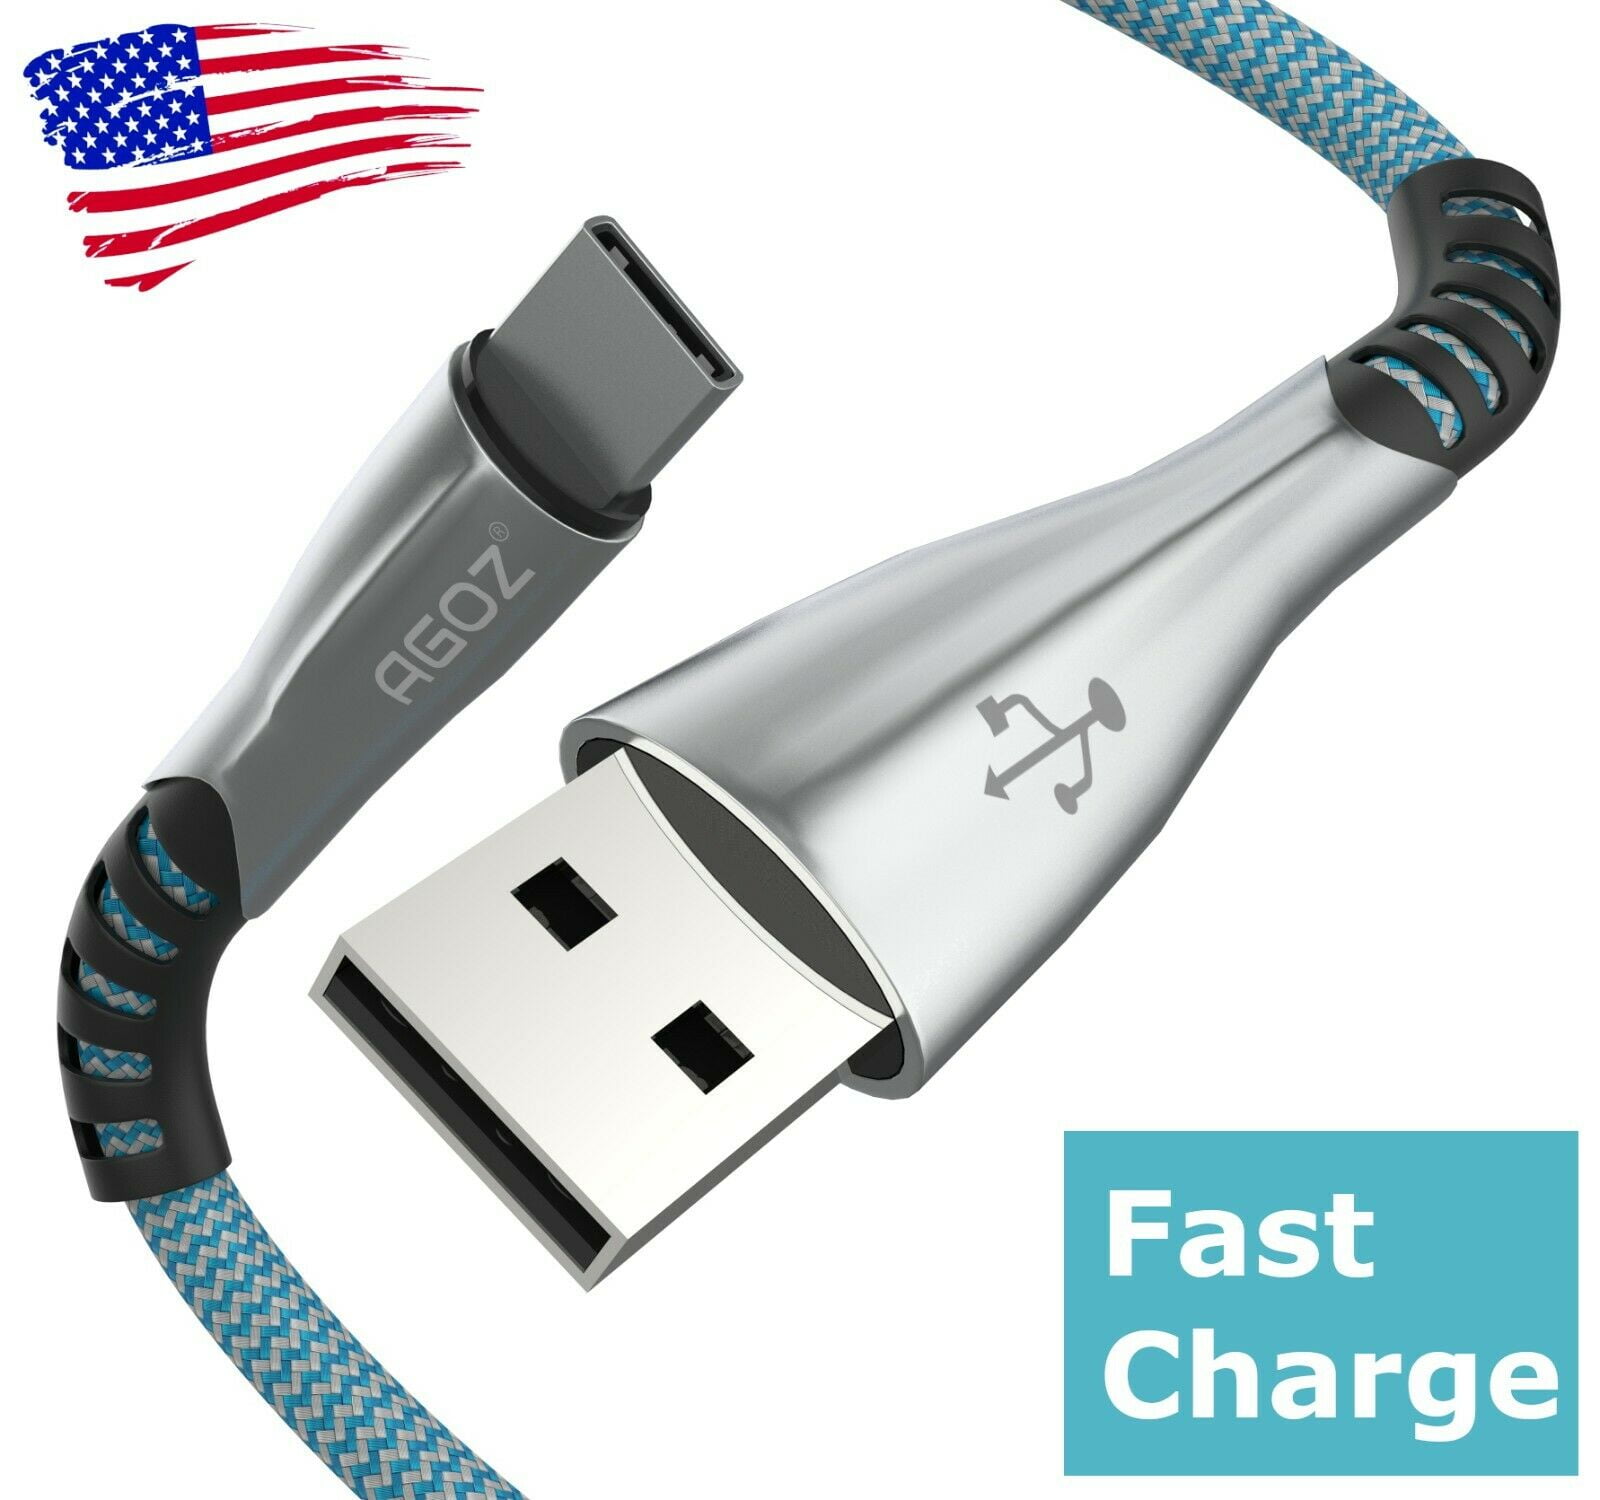 Pixel 4a Premium Fast Charge USB Cord for Google Pixel 4 Pixel 5 Pixel 4 XL